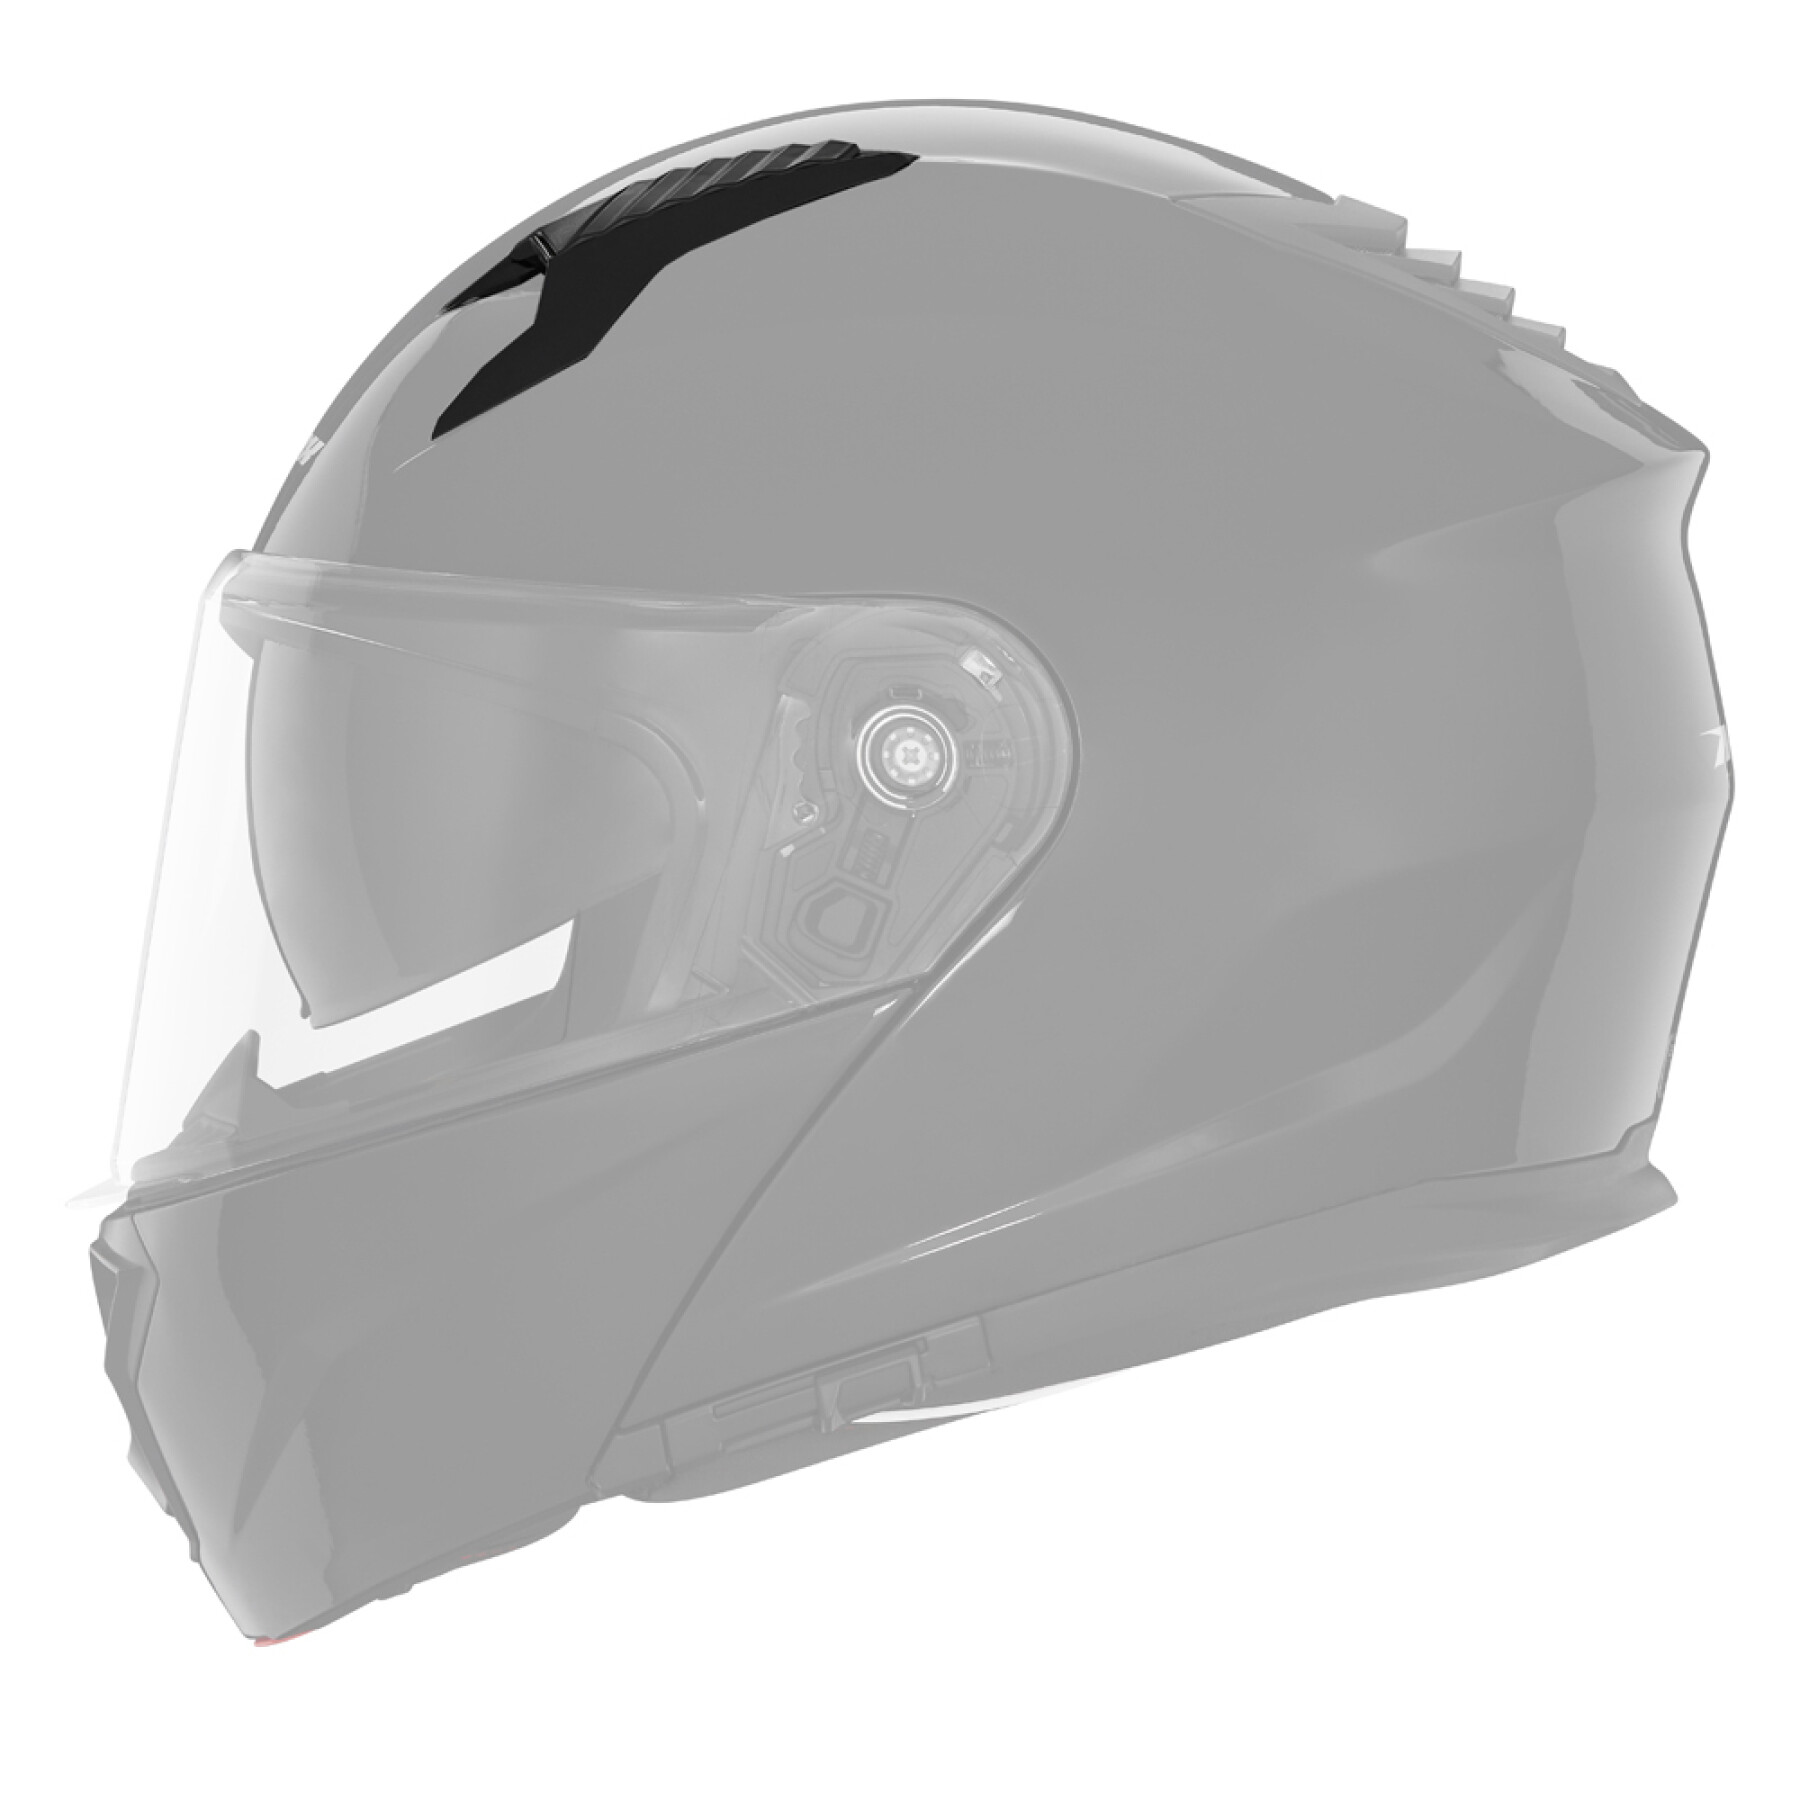 Ventilazione casco moto superiore Nox N 968